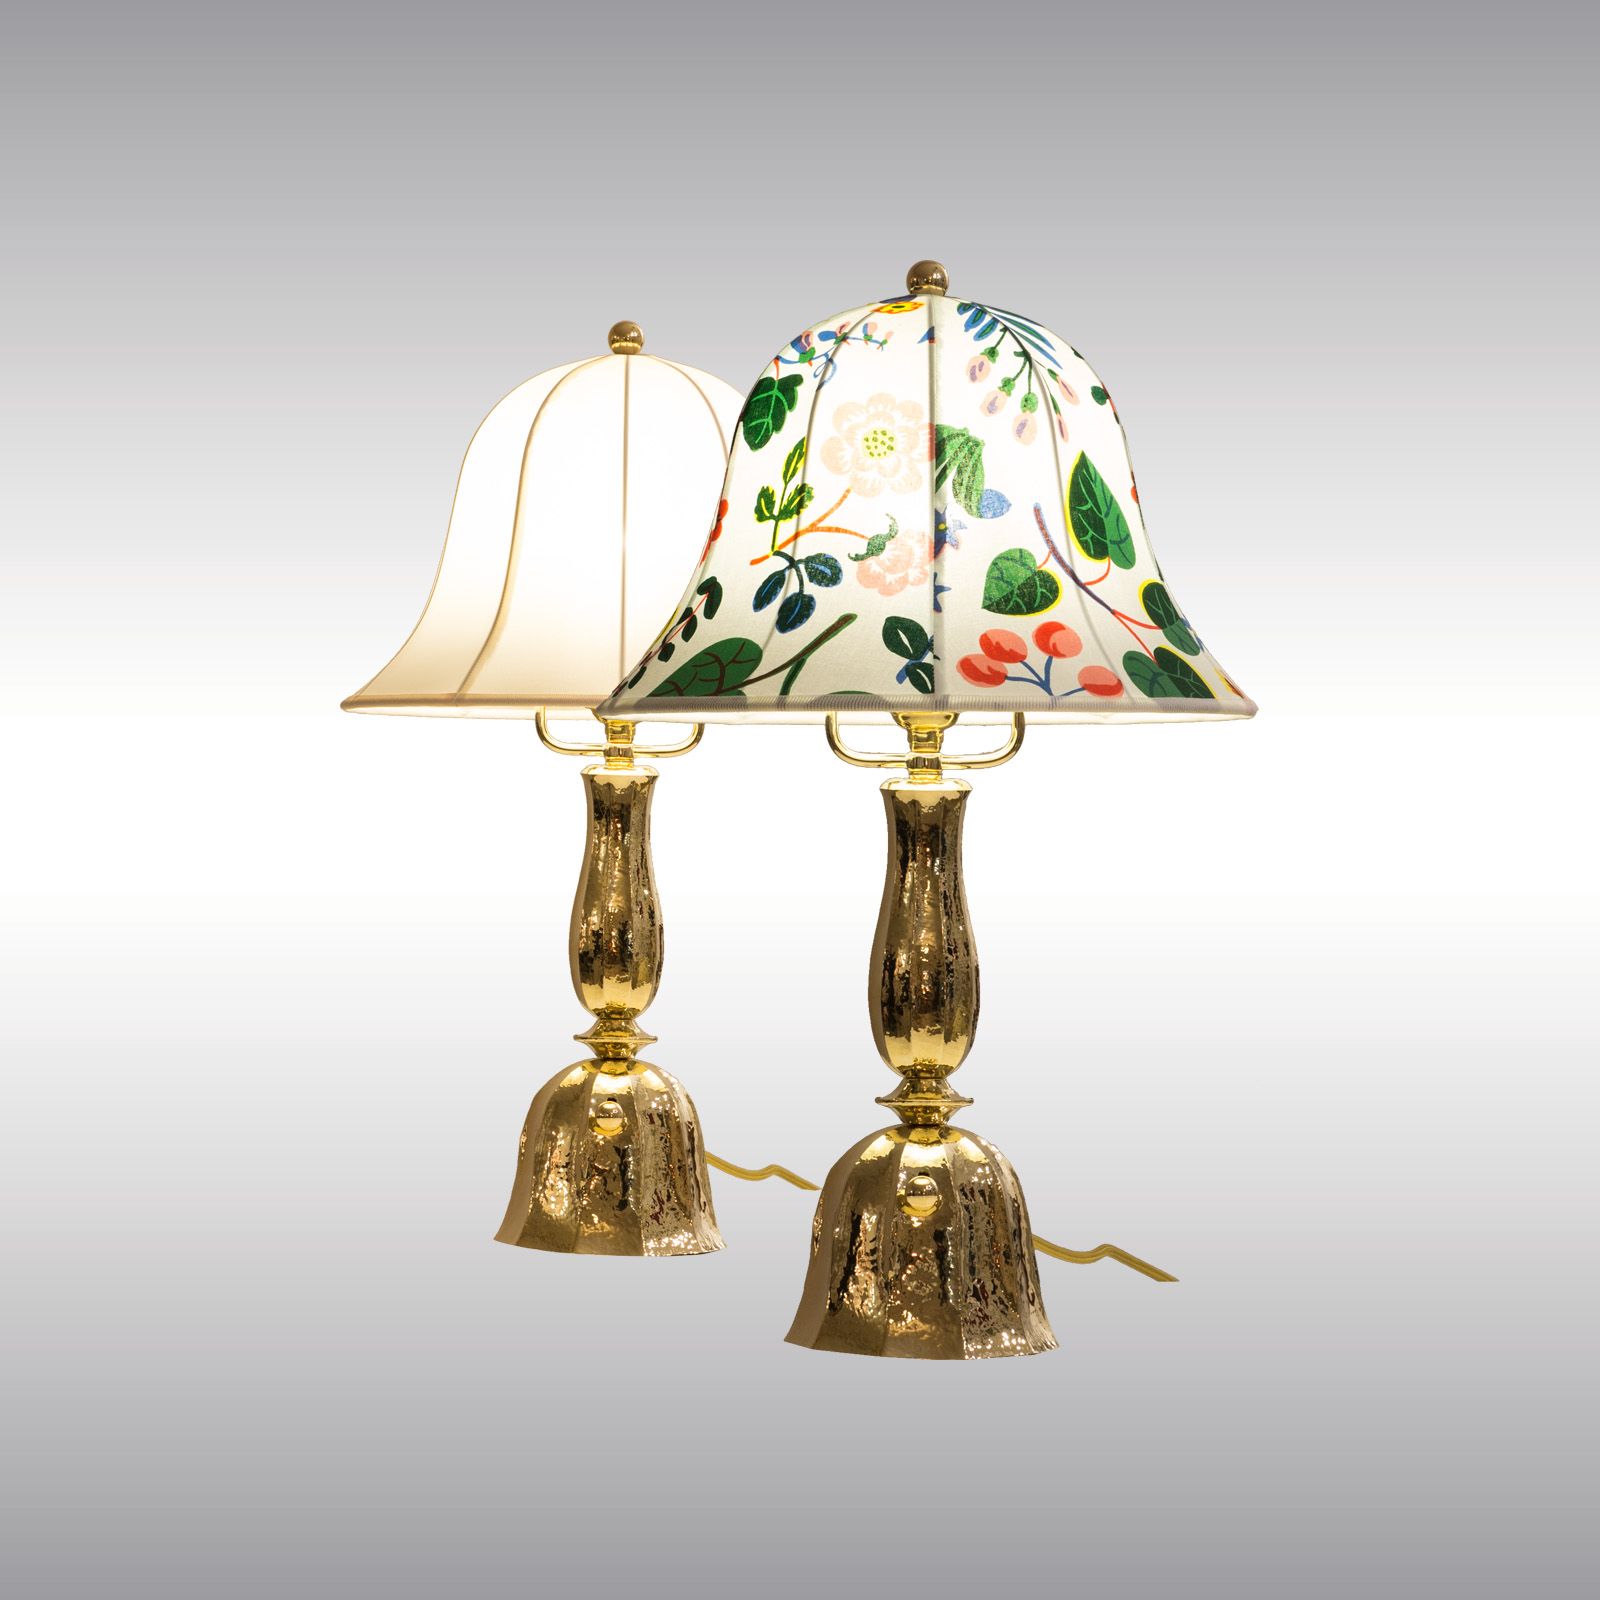 WOKA LAMPS VIENNA - OrderNr.: 21812|Hammered Josef Hoffmann Wiener Werkstaette Table Lamp - Design: Josef Hoffmann